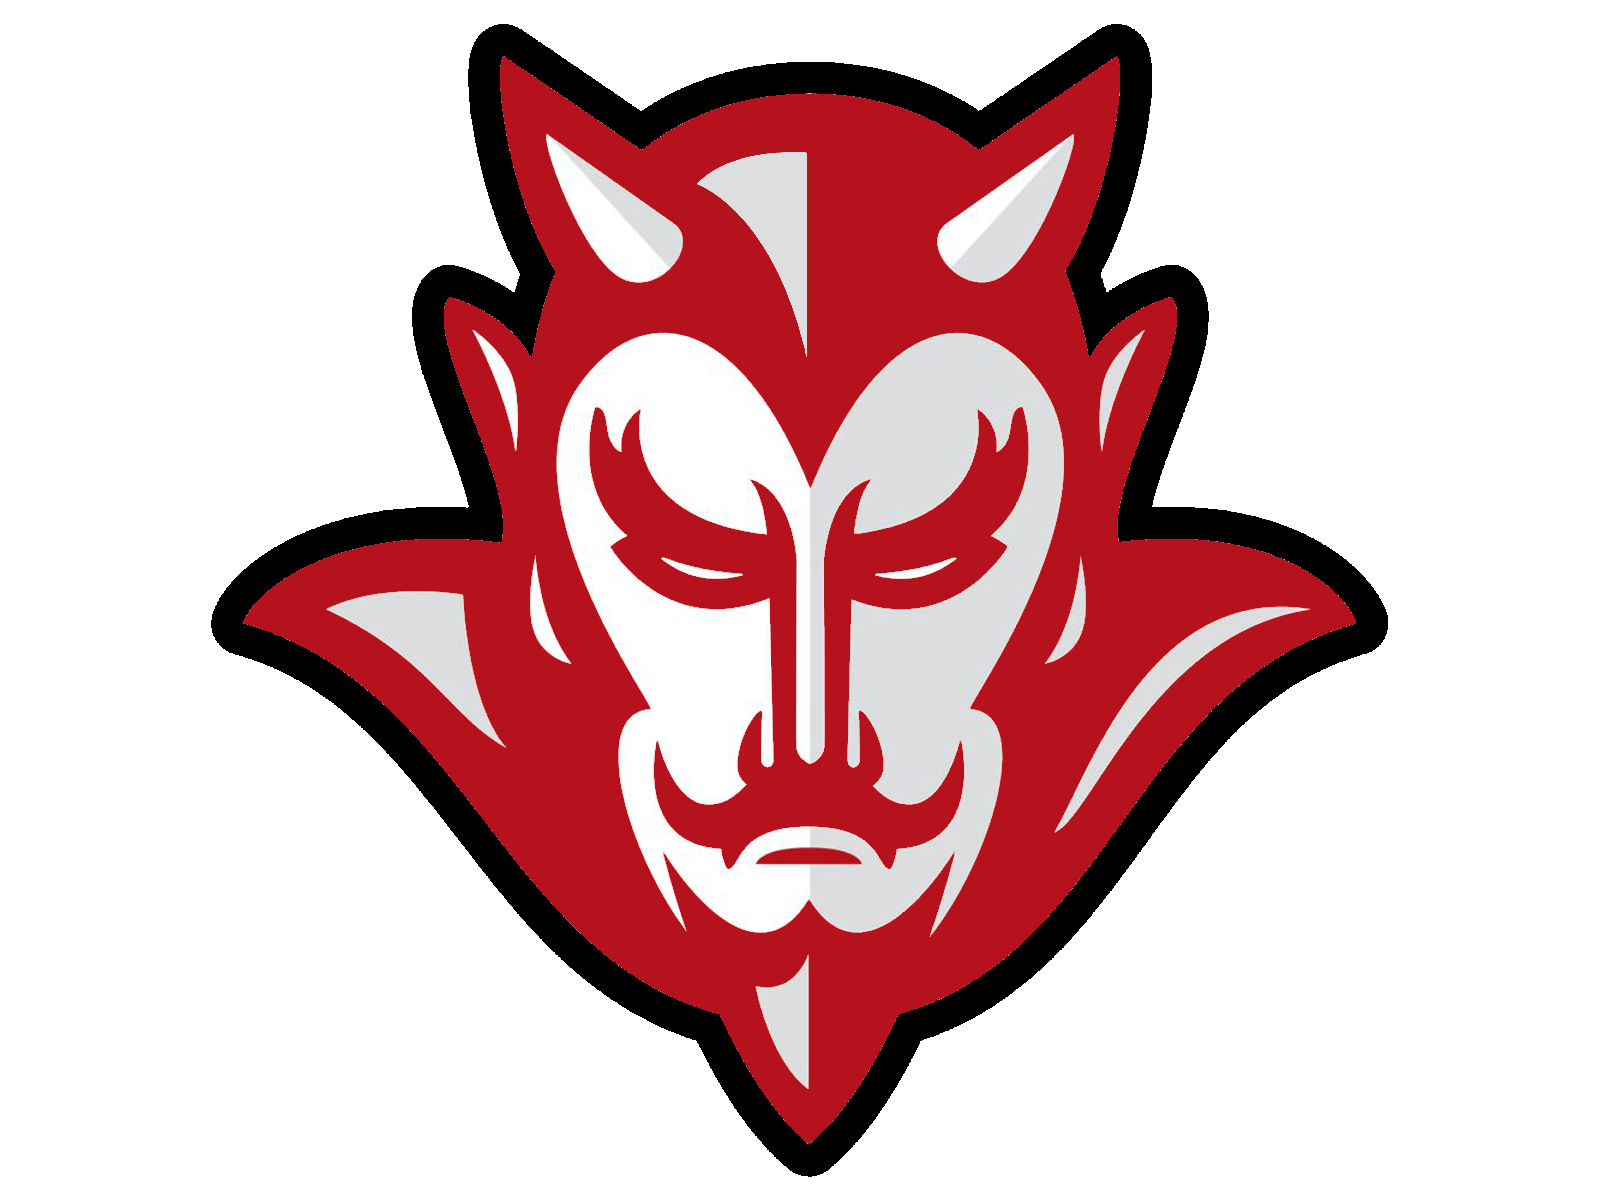 For School Red Devils Logo - The Calhoun Red Devils - ScoreStream